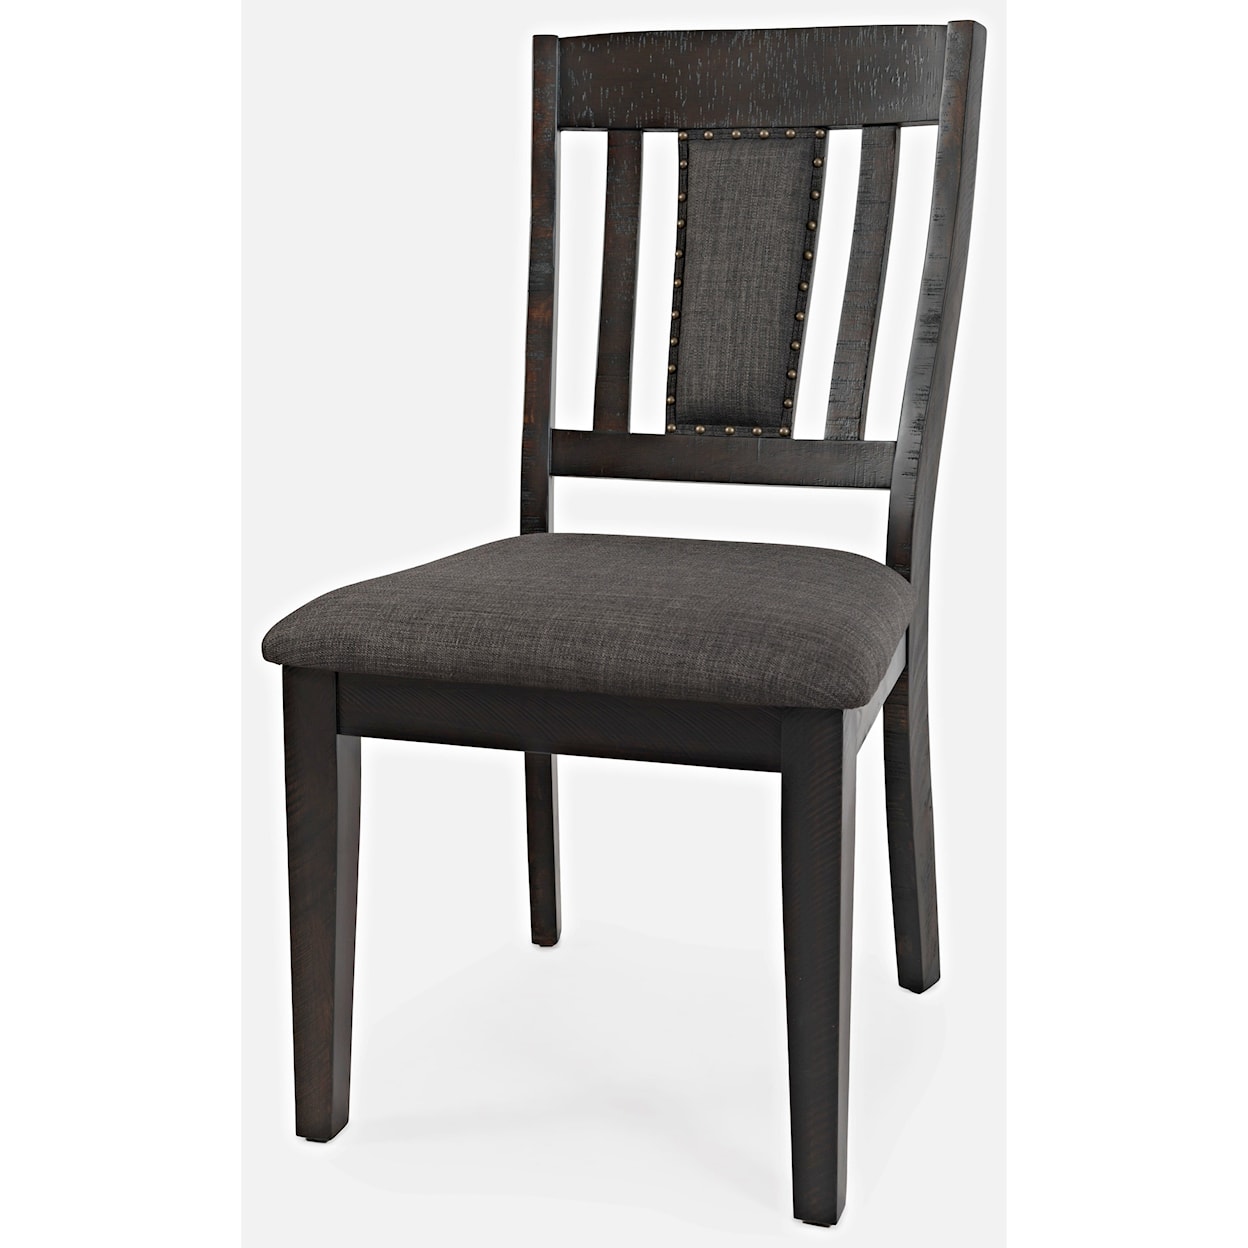 VFM Signature American Rustics Upholstered Slatback Dining Chair